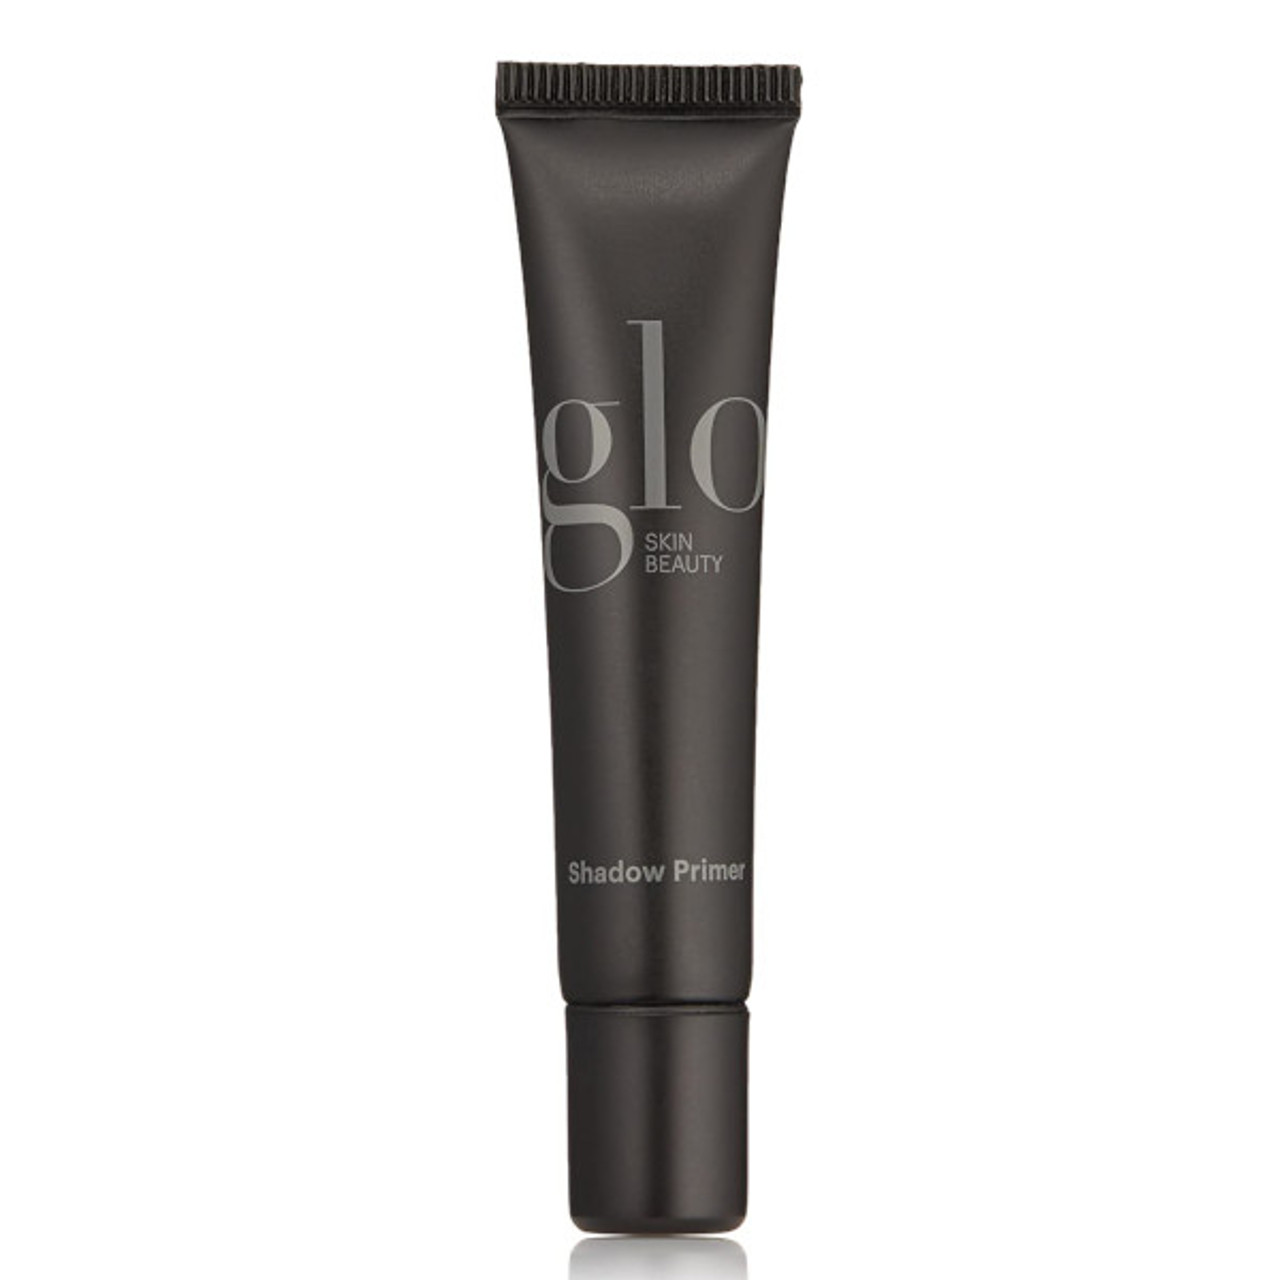 Glo Skin Beauty Shadow Primer - 0.33 oz